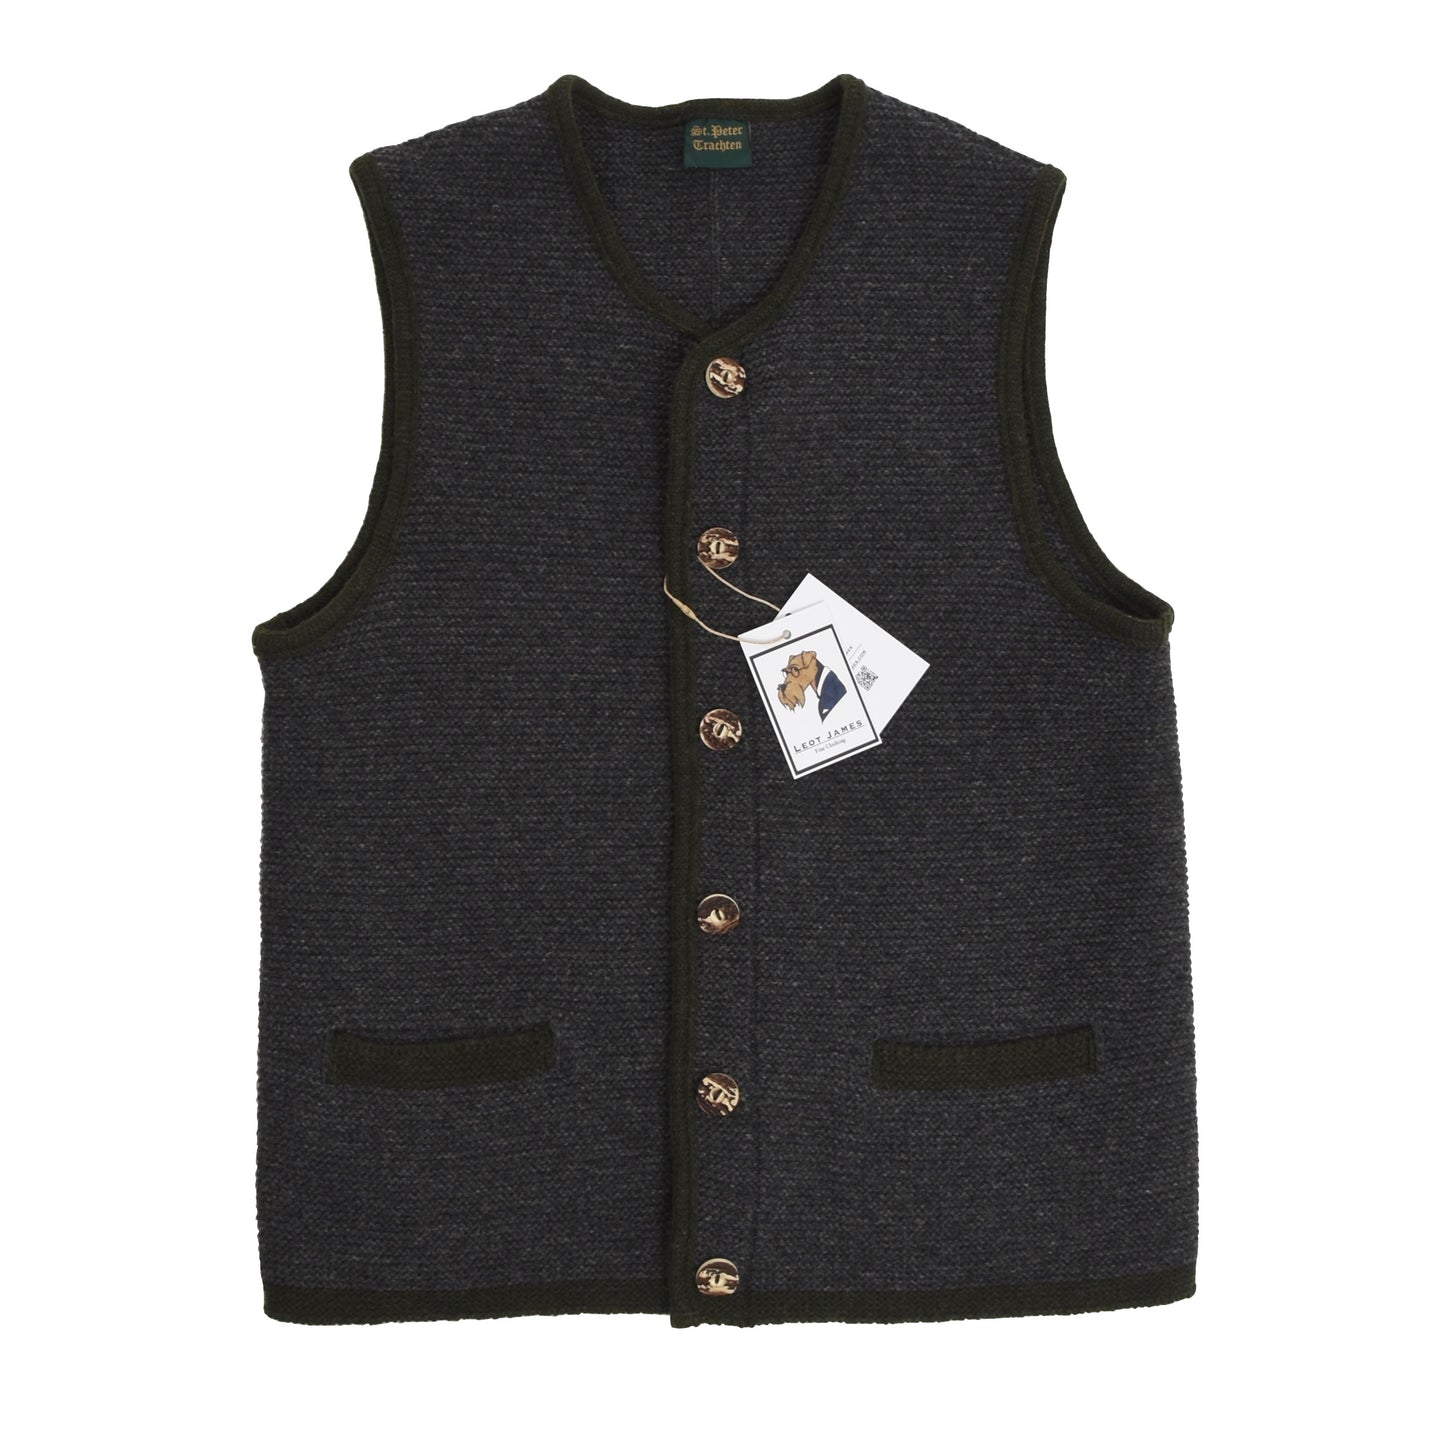 St. Peter Trachten Wool Sweater Vest/Trachtenweste Size 52 - Grey